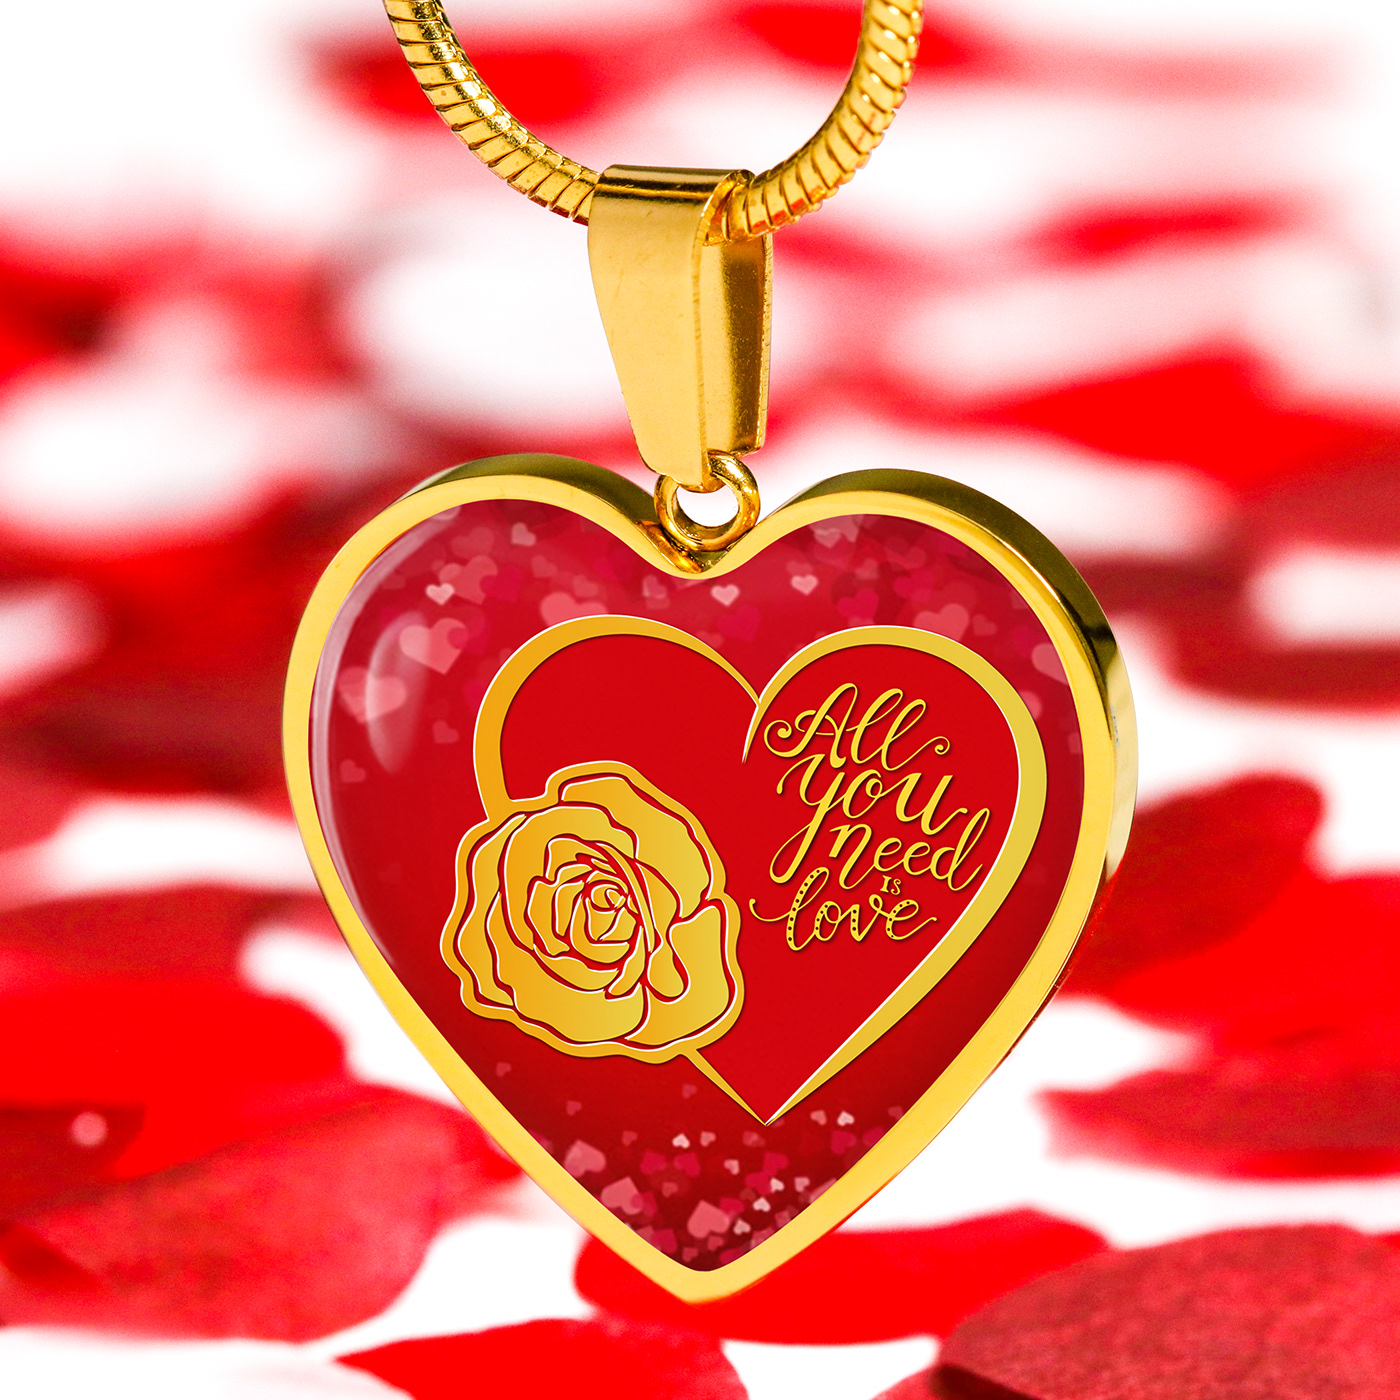 wife wish gift valentine wish gift love wish gift friend gift jewelry shop Jewelry Blog Pendant Jewelry style jewelry gifts for friends Shopping and fashion